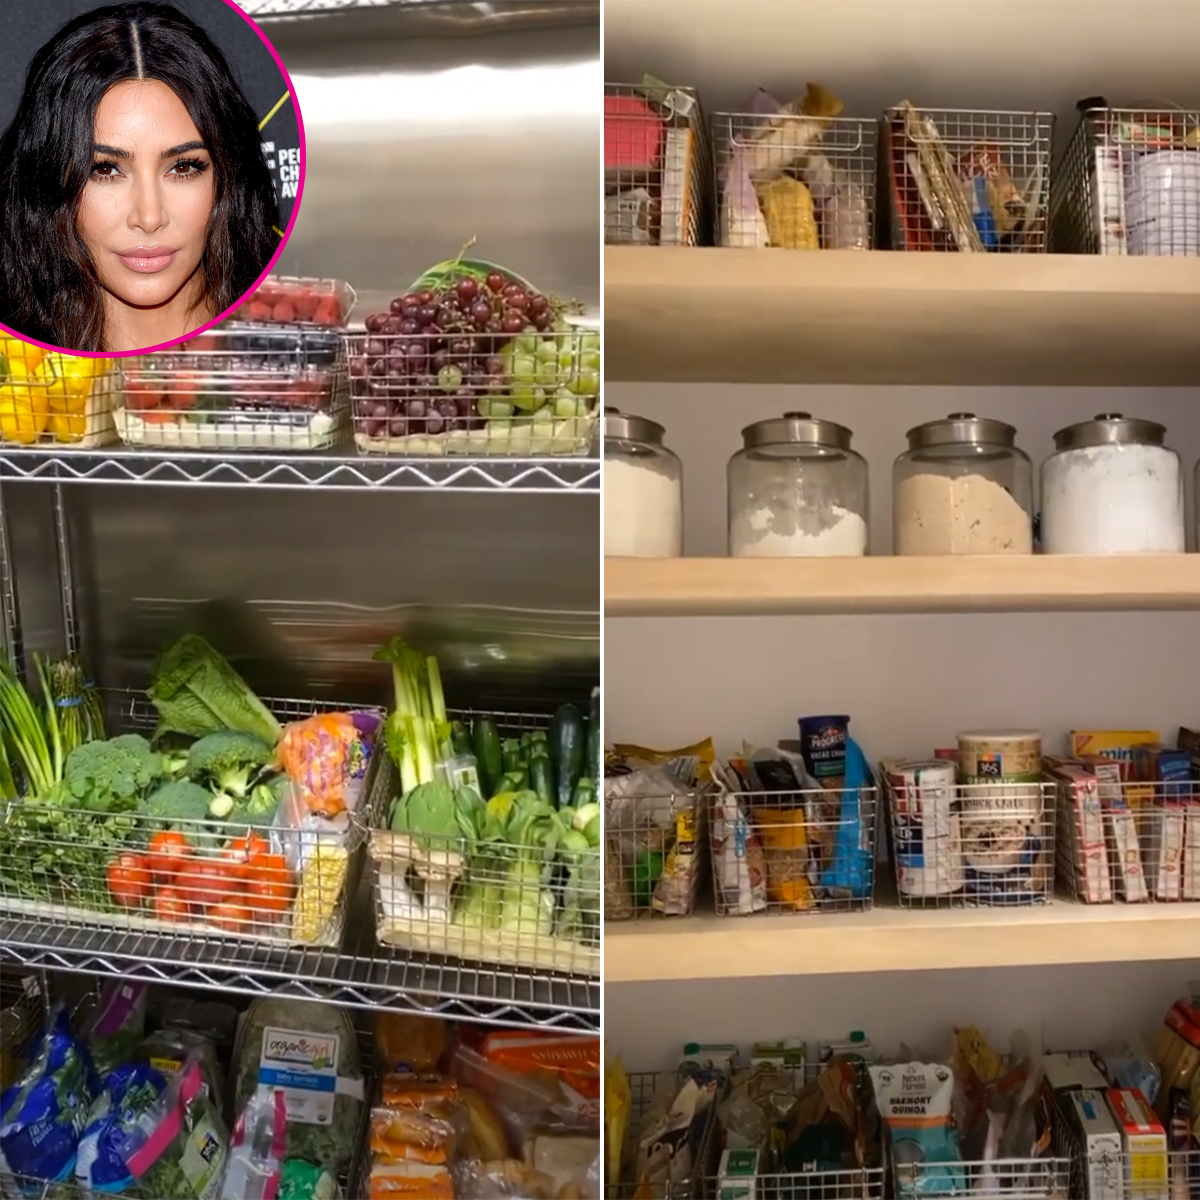 Kim Kardashian Shows Off Her Pantry, 'Main' Refrigerator: Photos